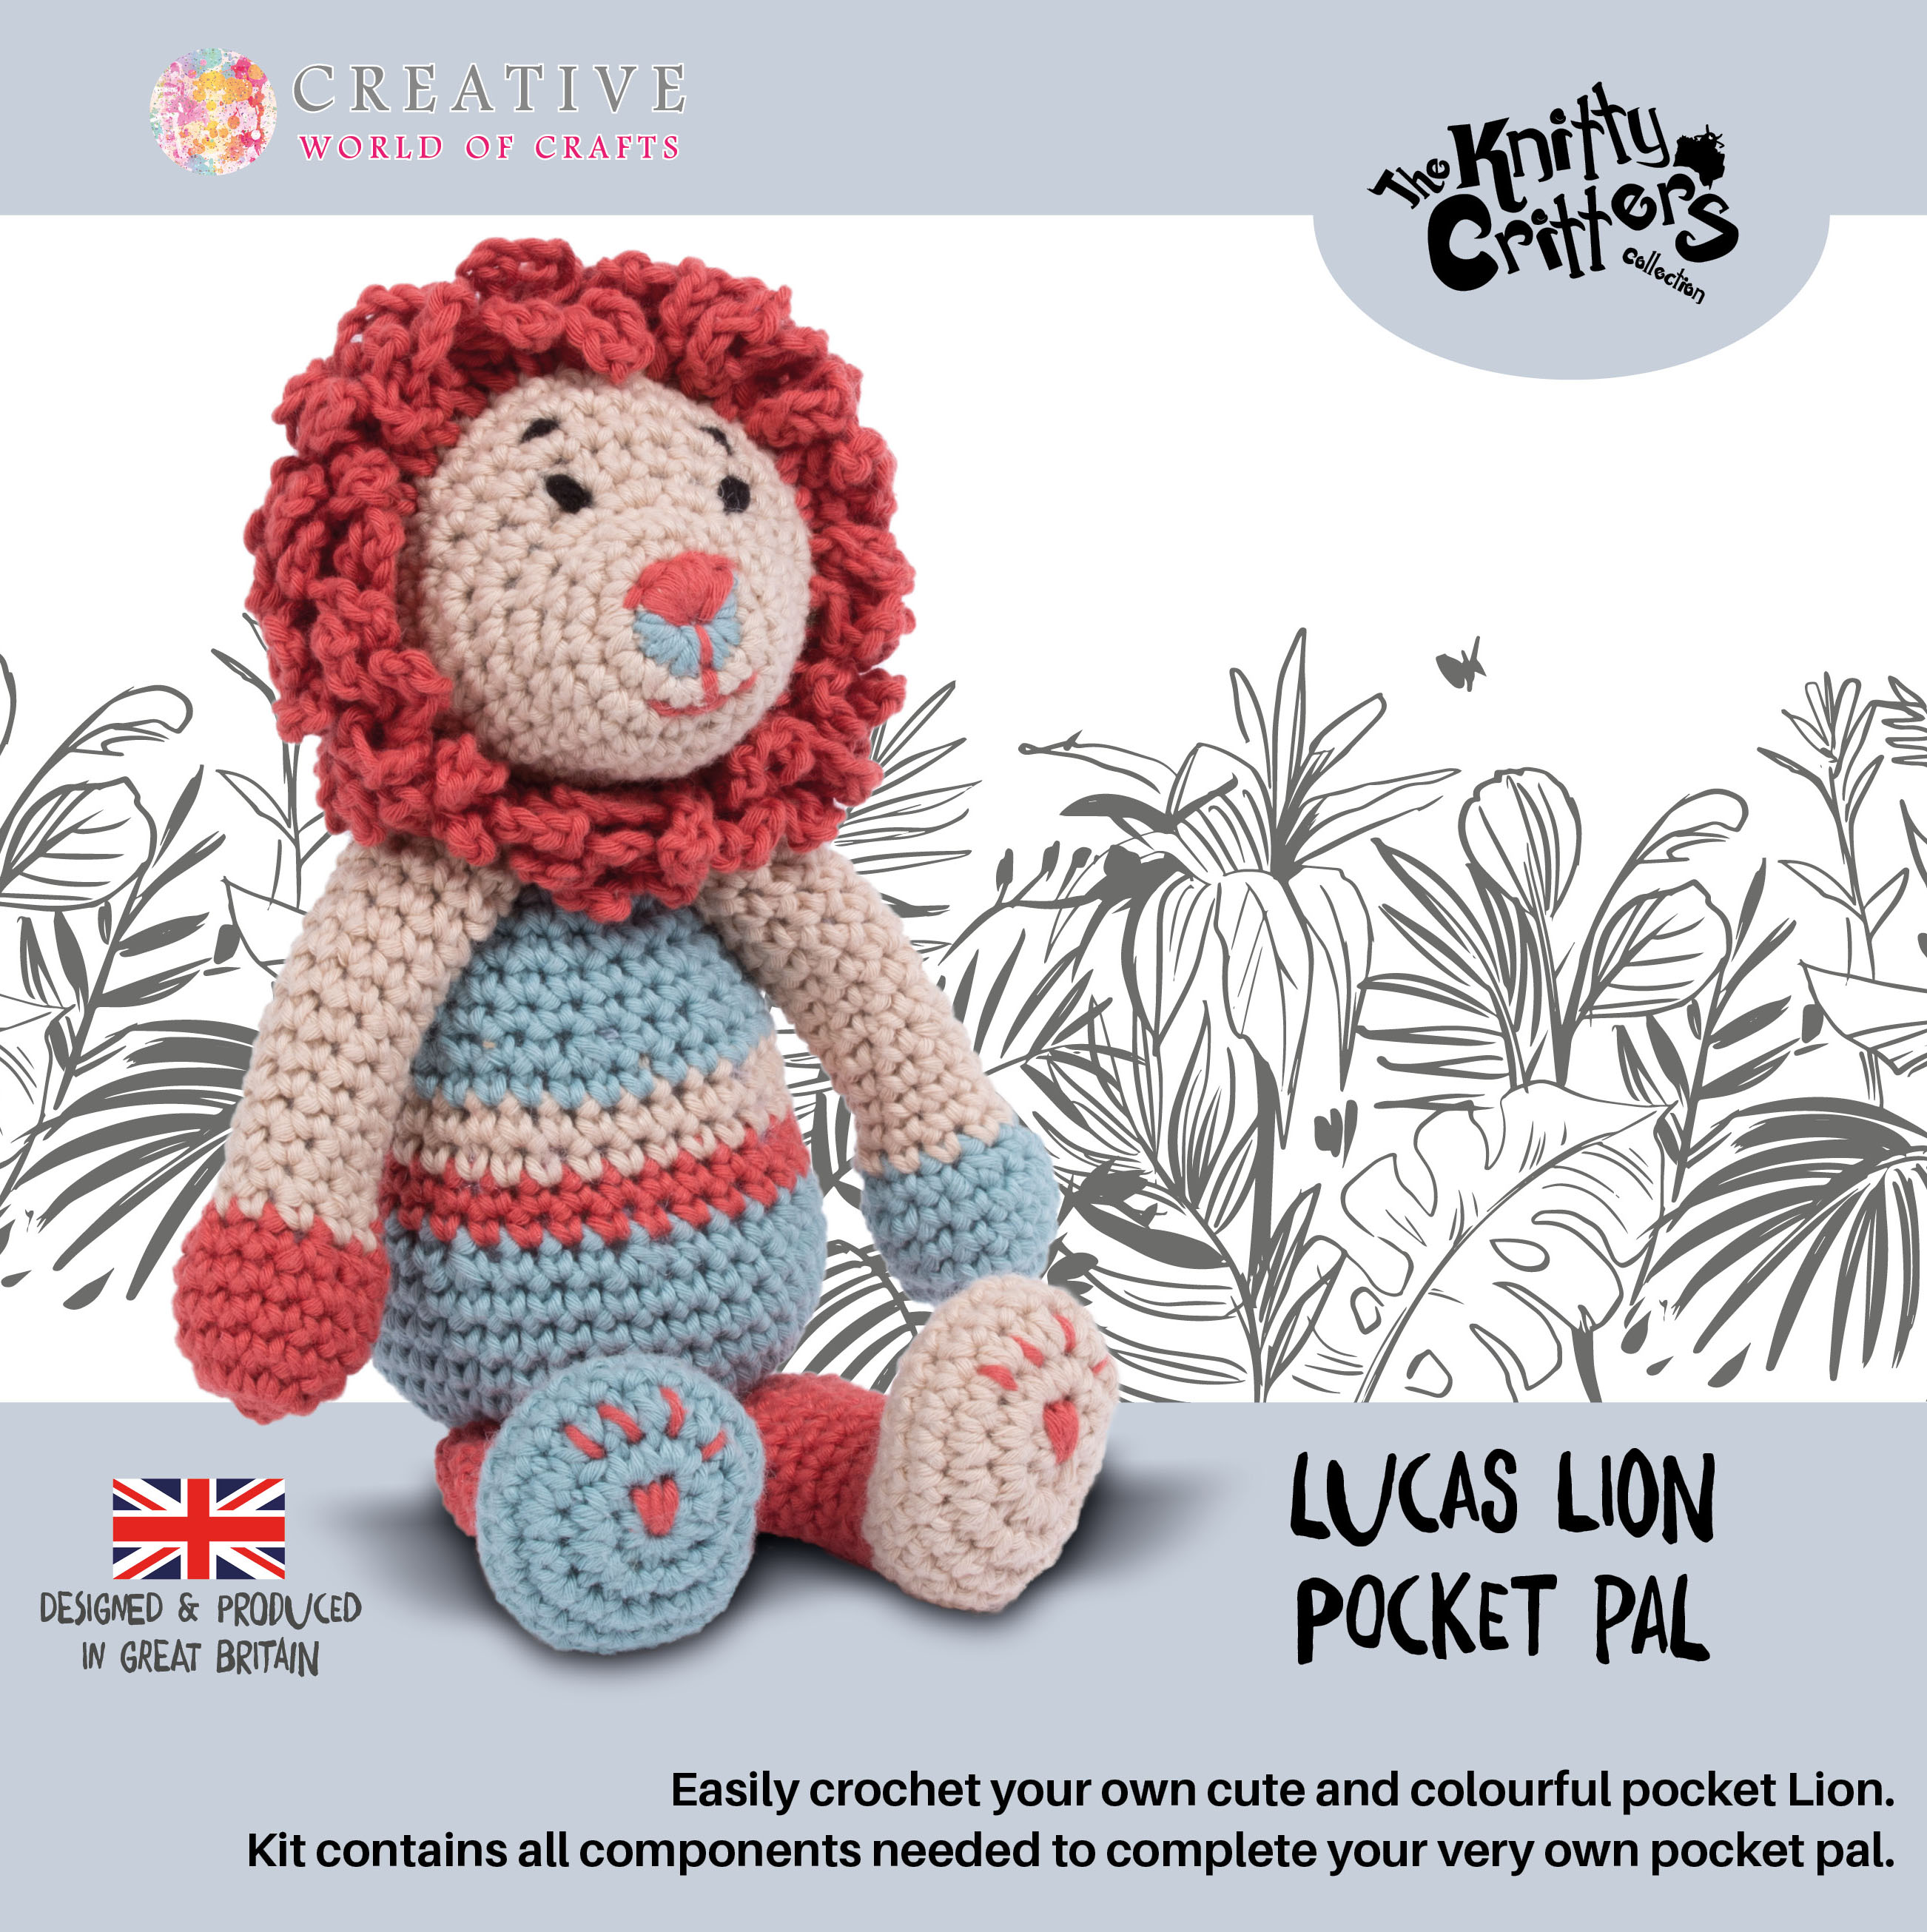 Knitty Critters - Pocket Pals - Lucas Lion